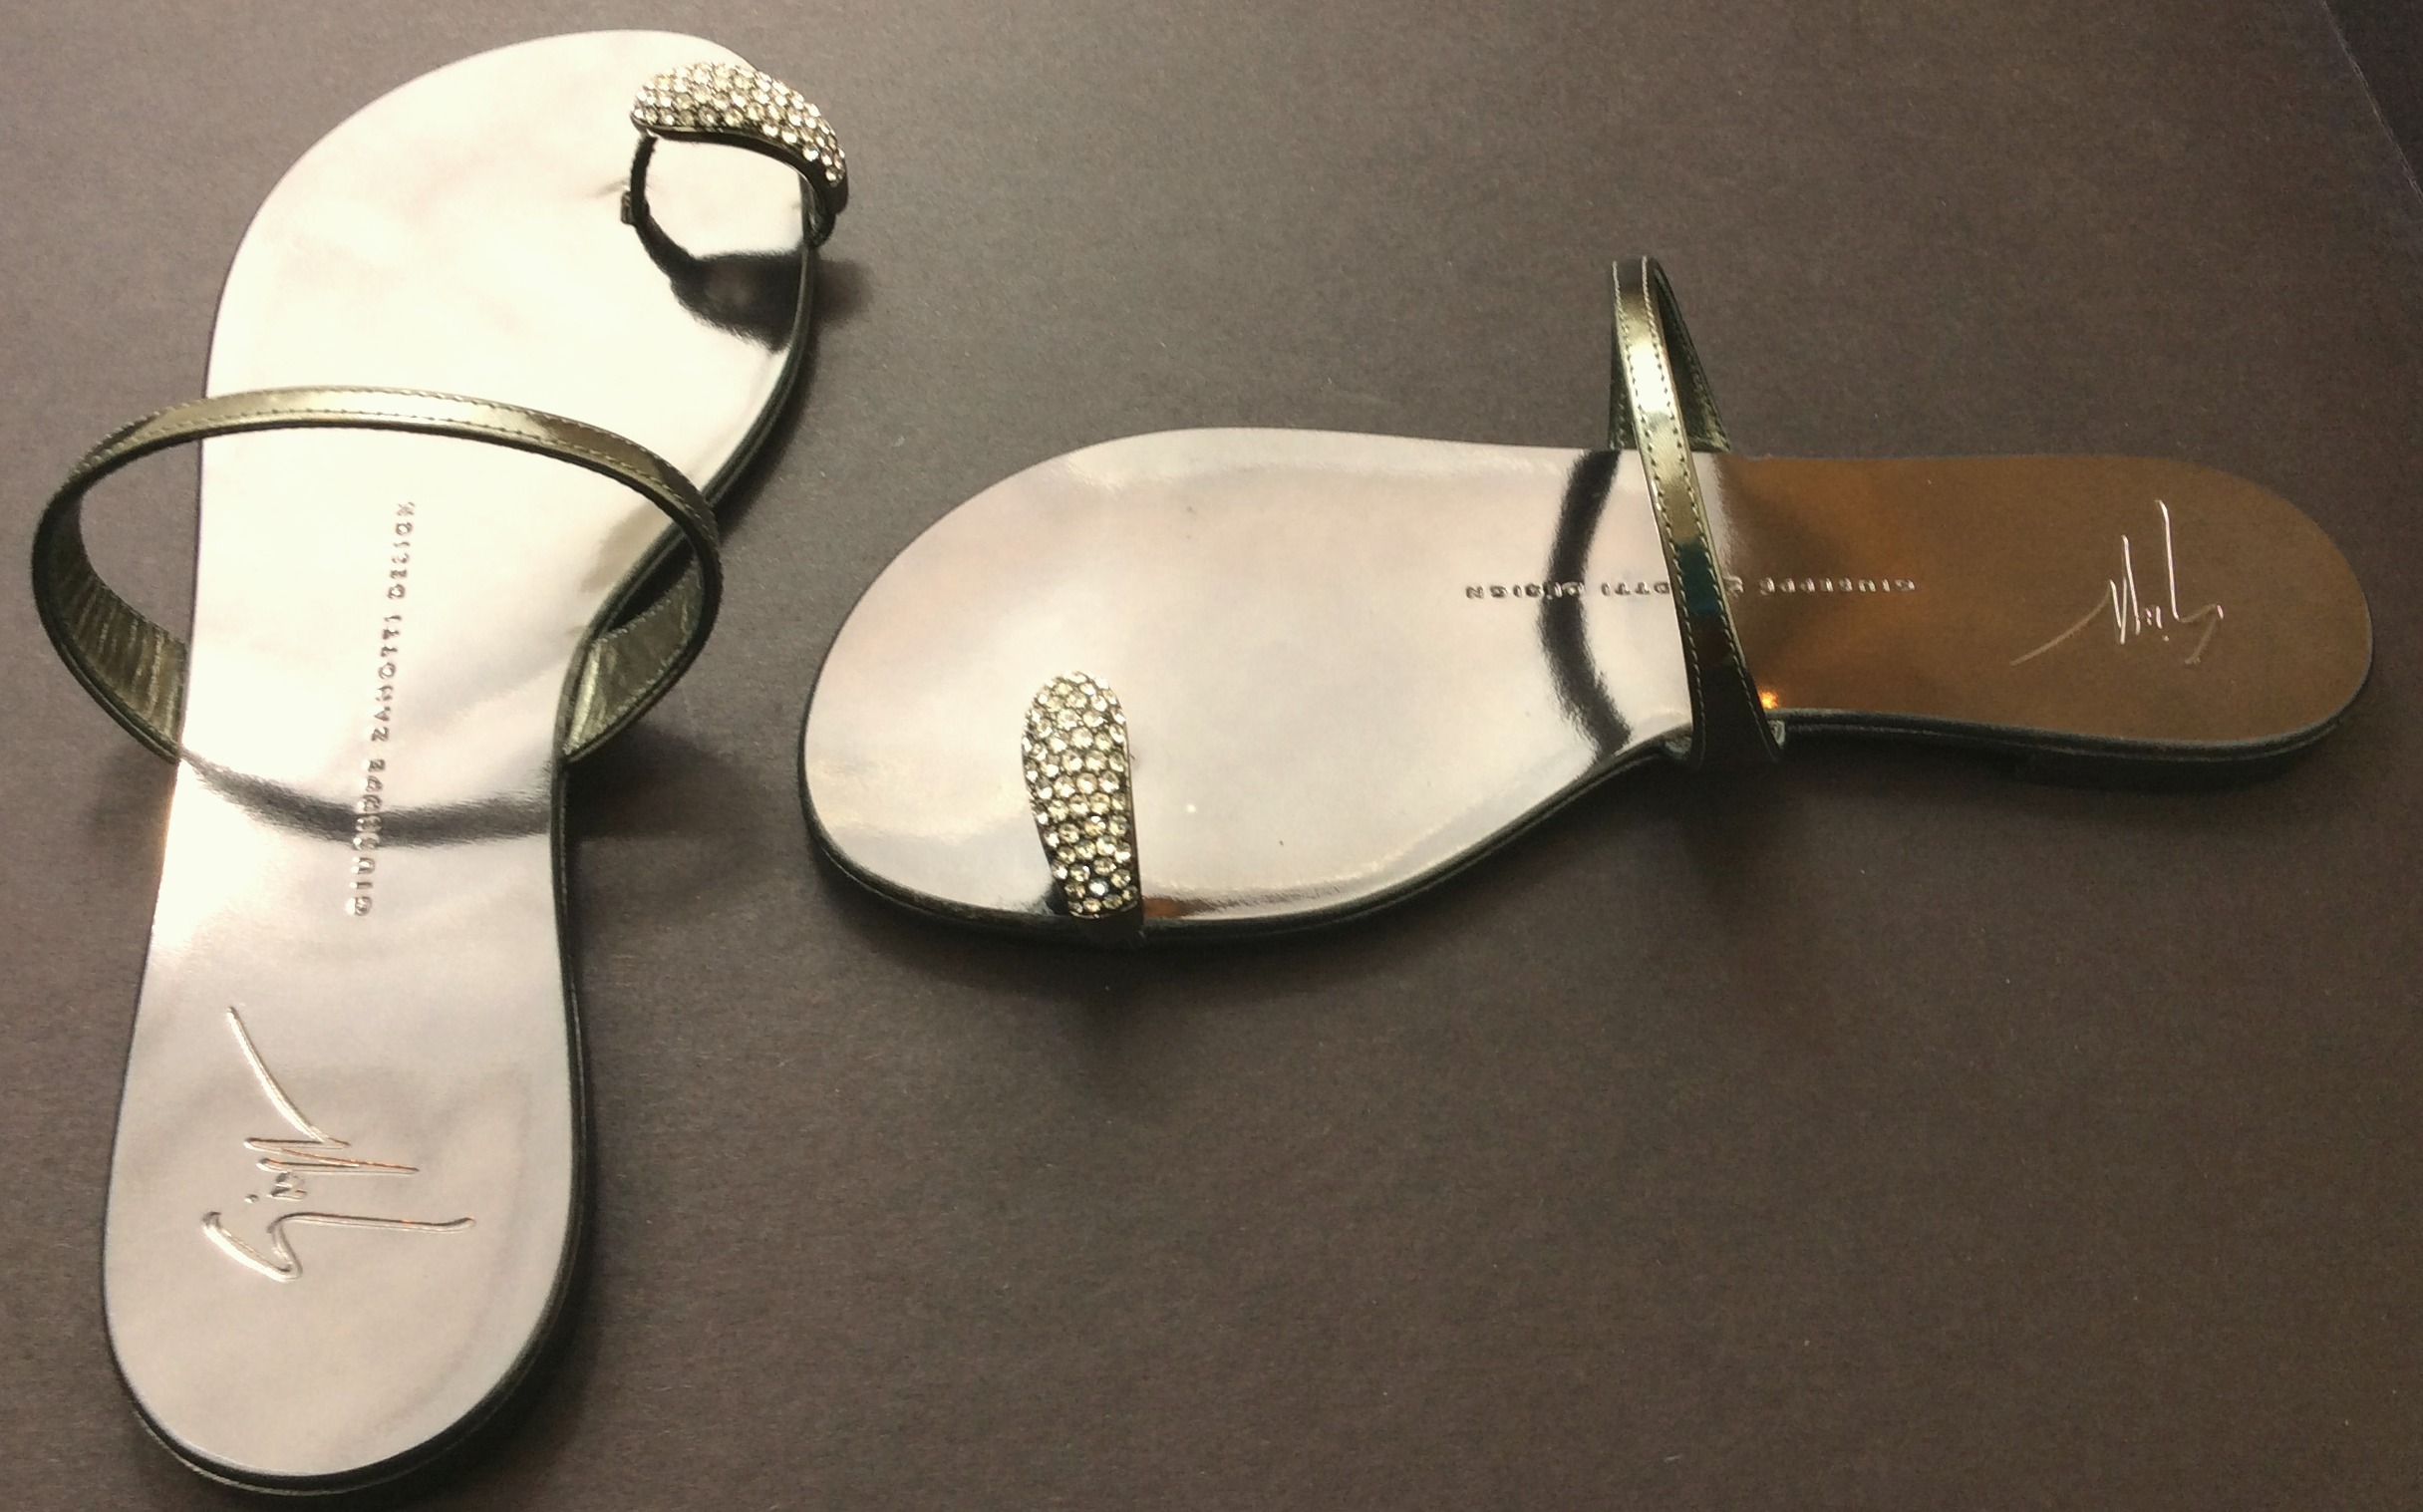 giuseppe zanotti nuvo rock jeweled toe ring leather sandal